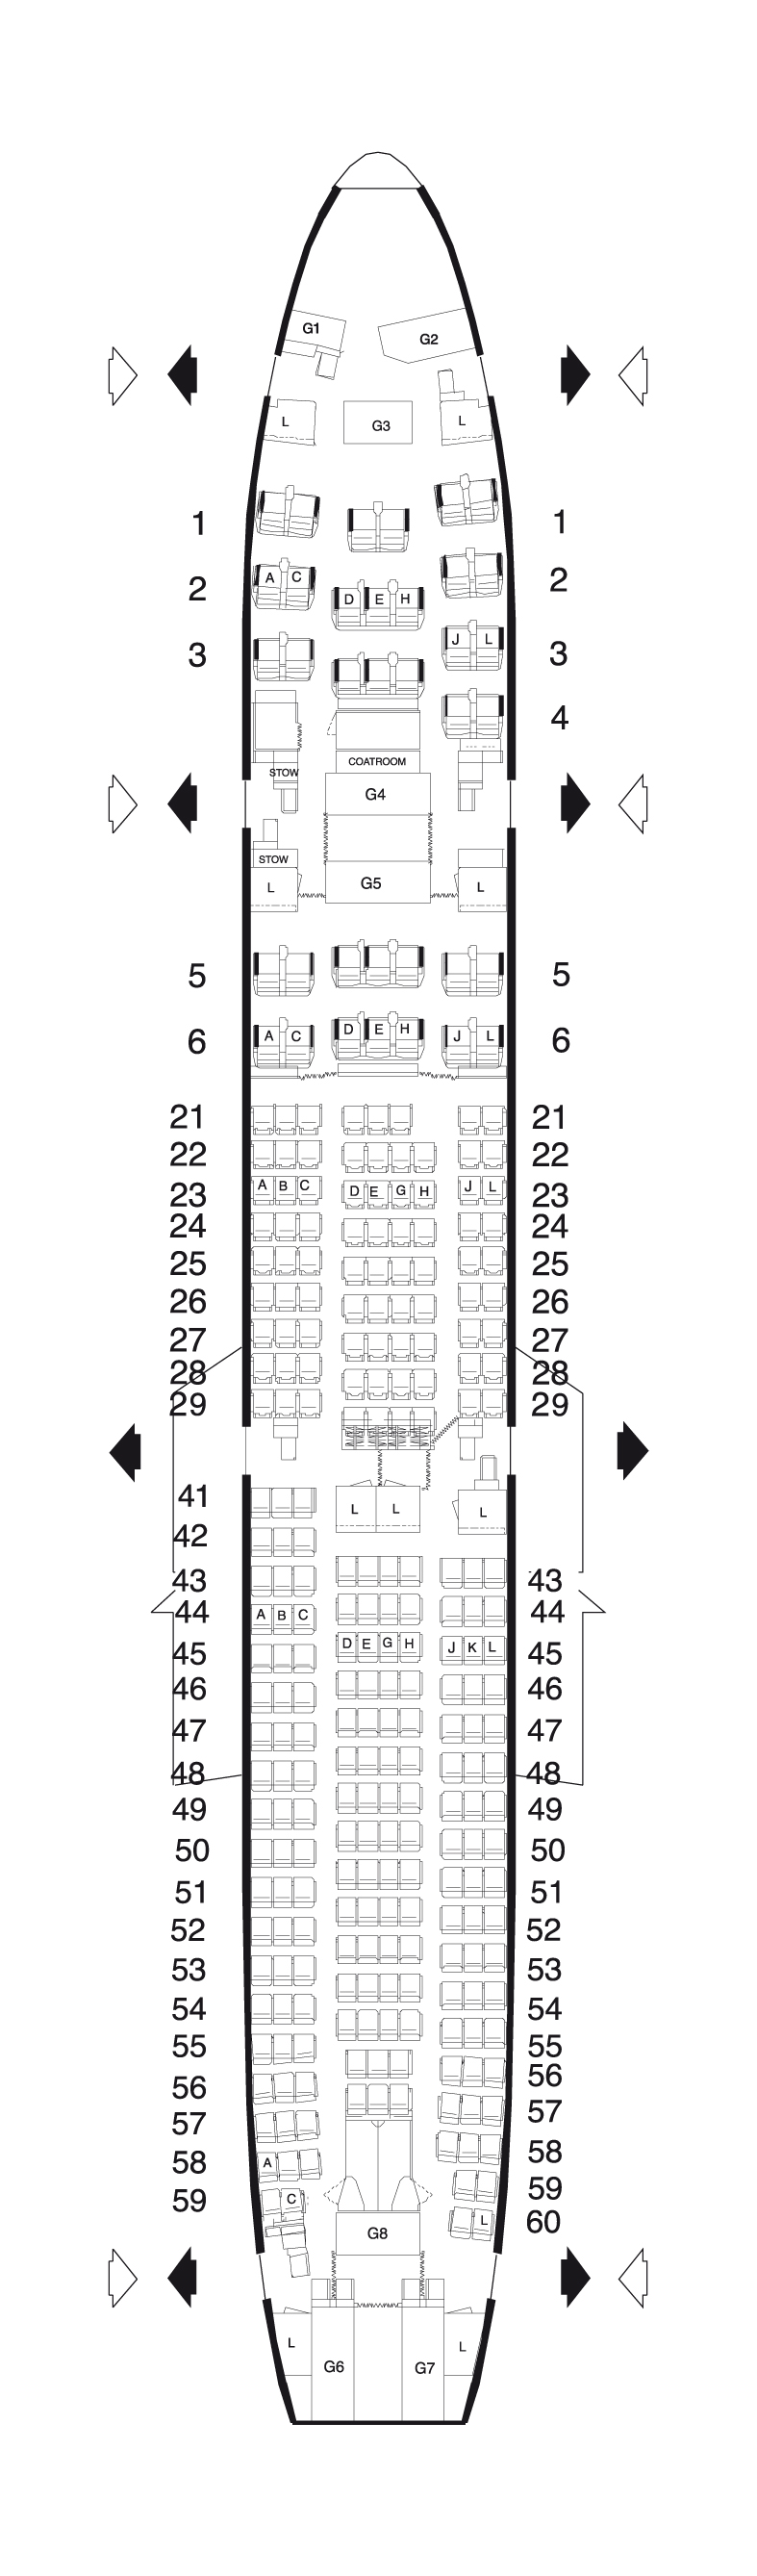 Sitzplan sunexpress 737 800